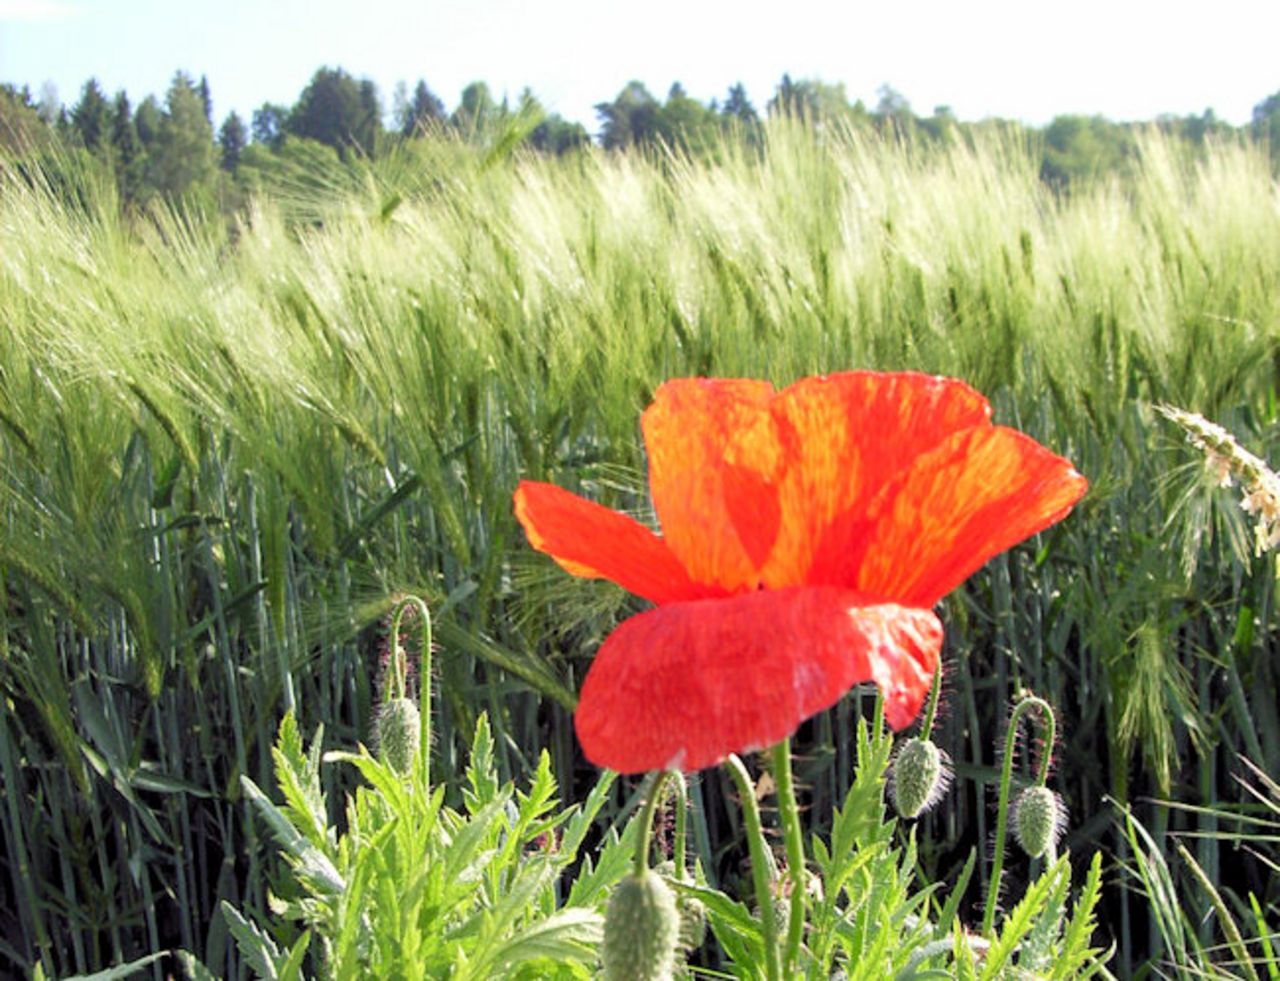 Poppy flower in front of a grainfield